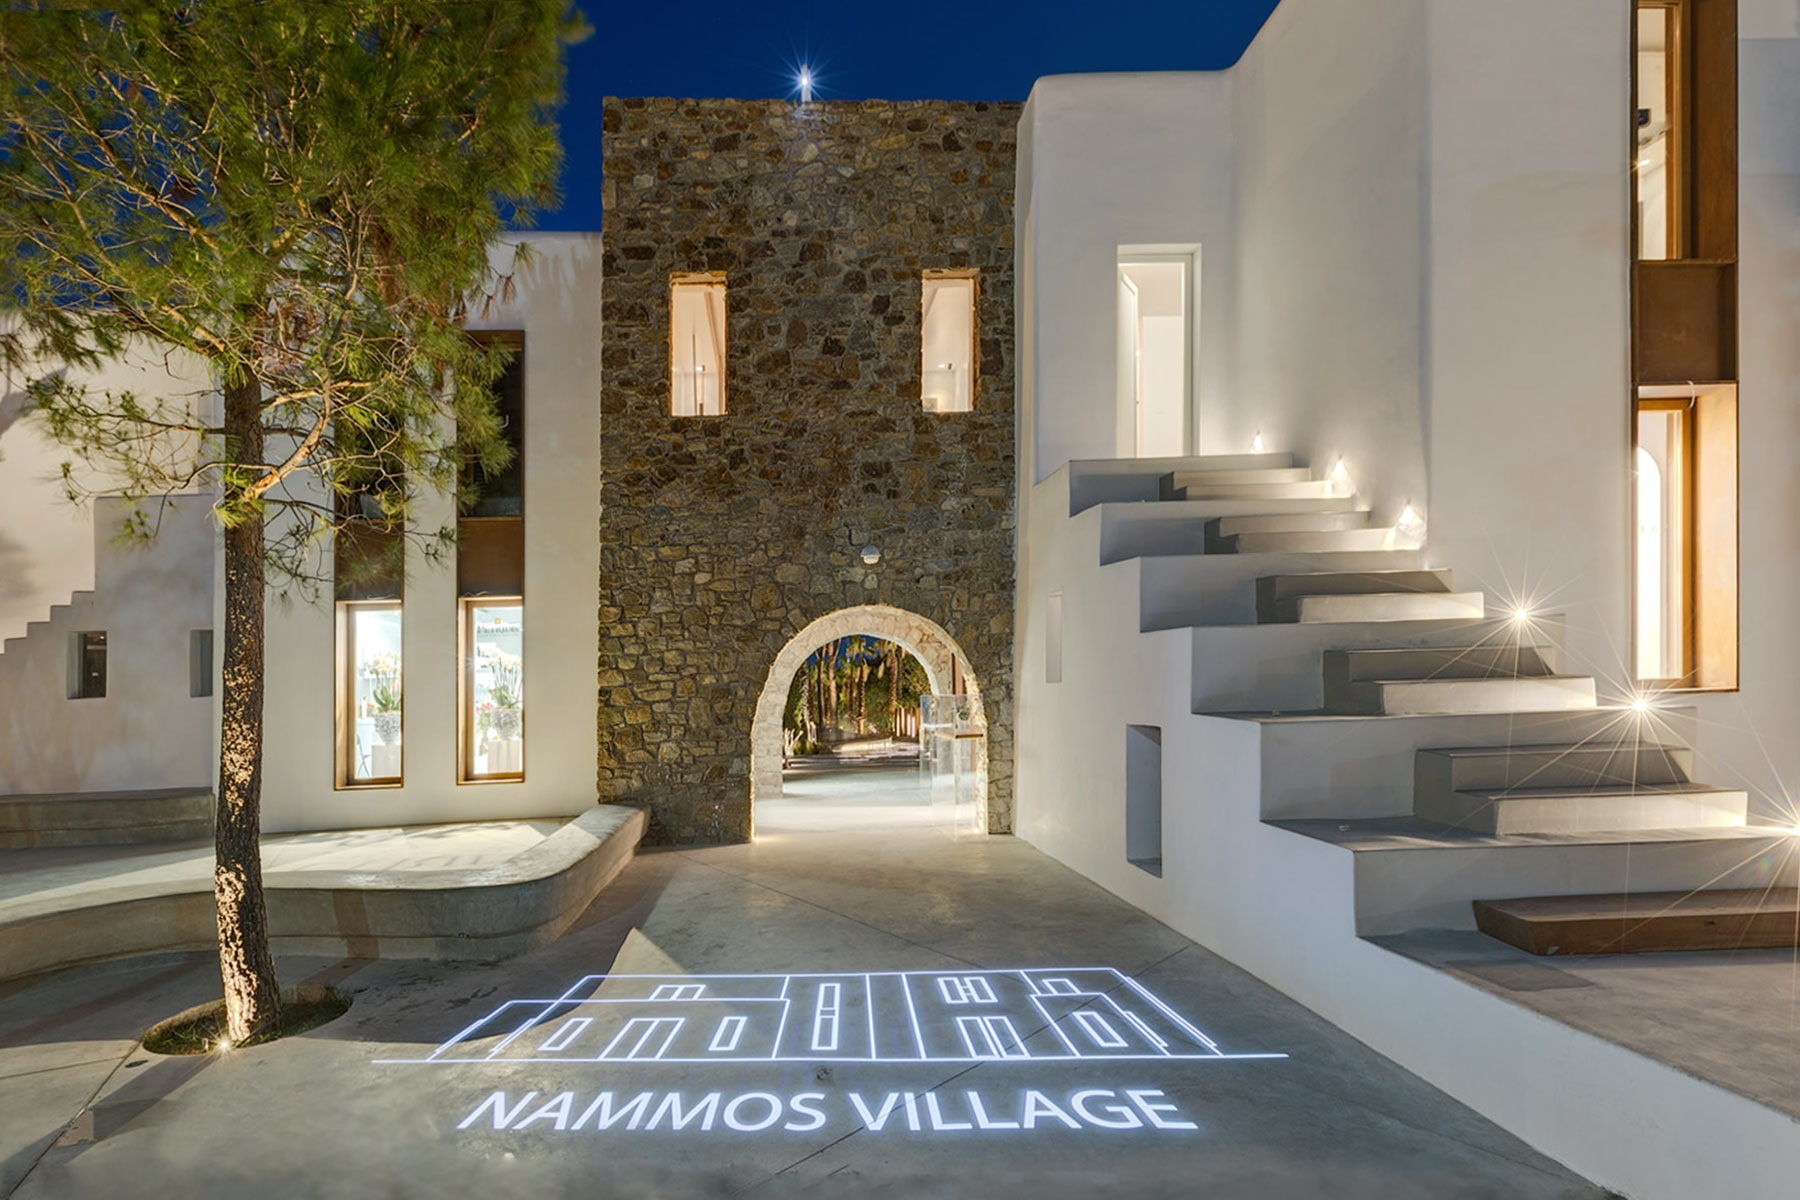 Nammos Village - Area Design Office